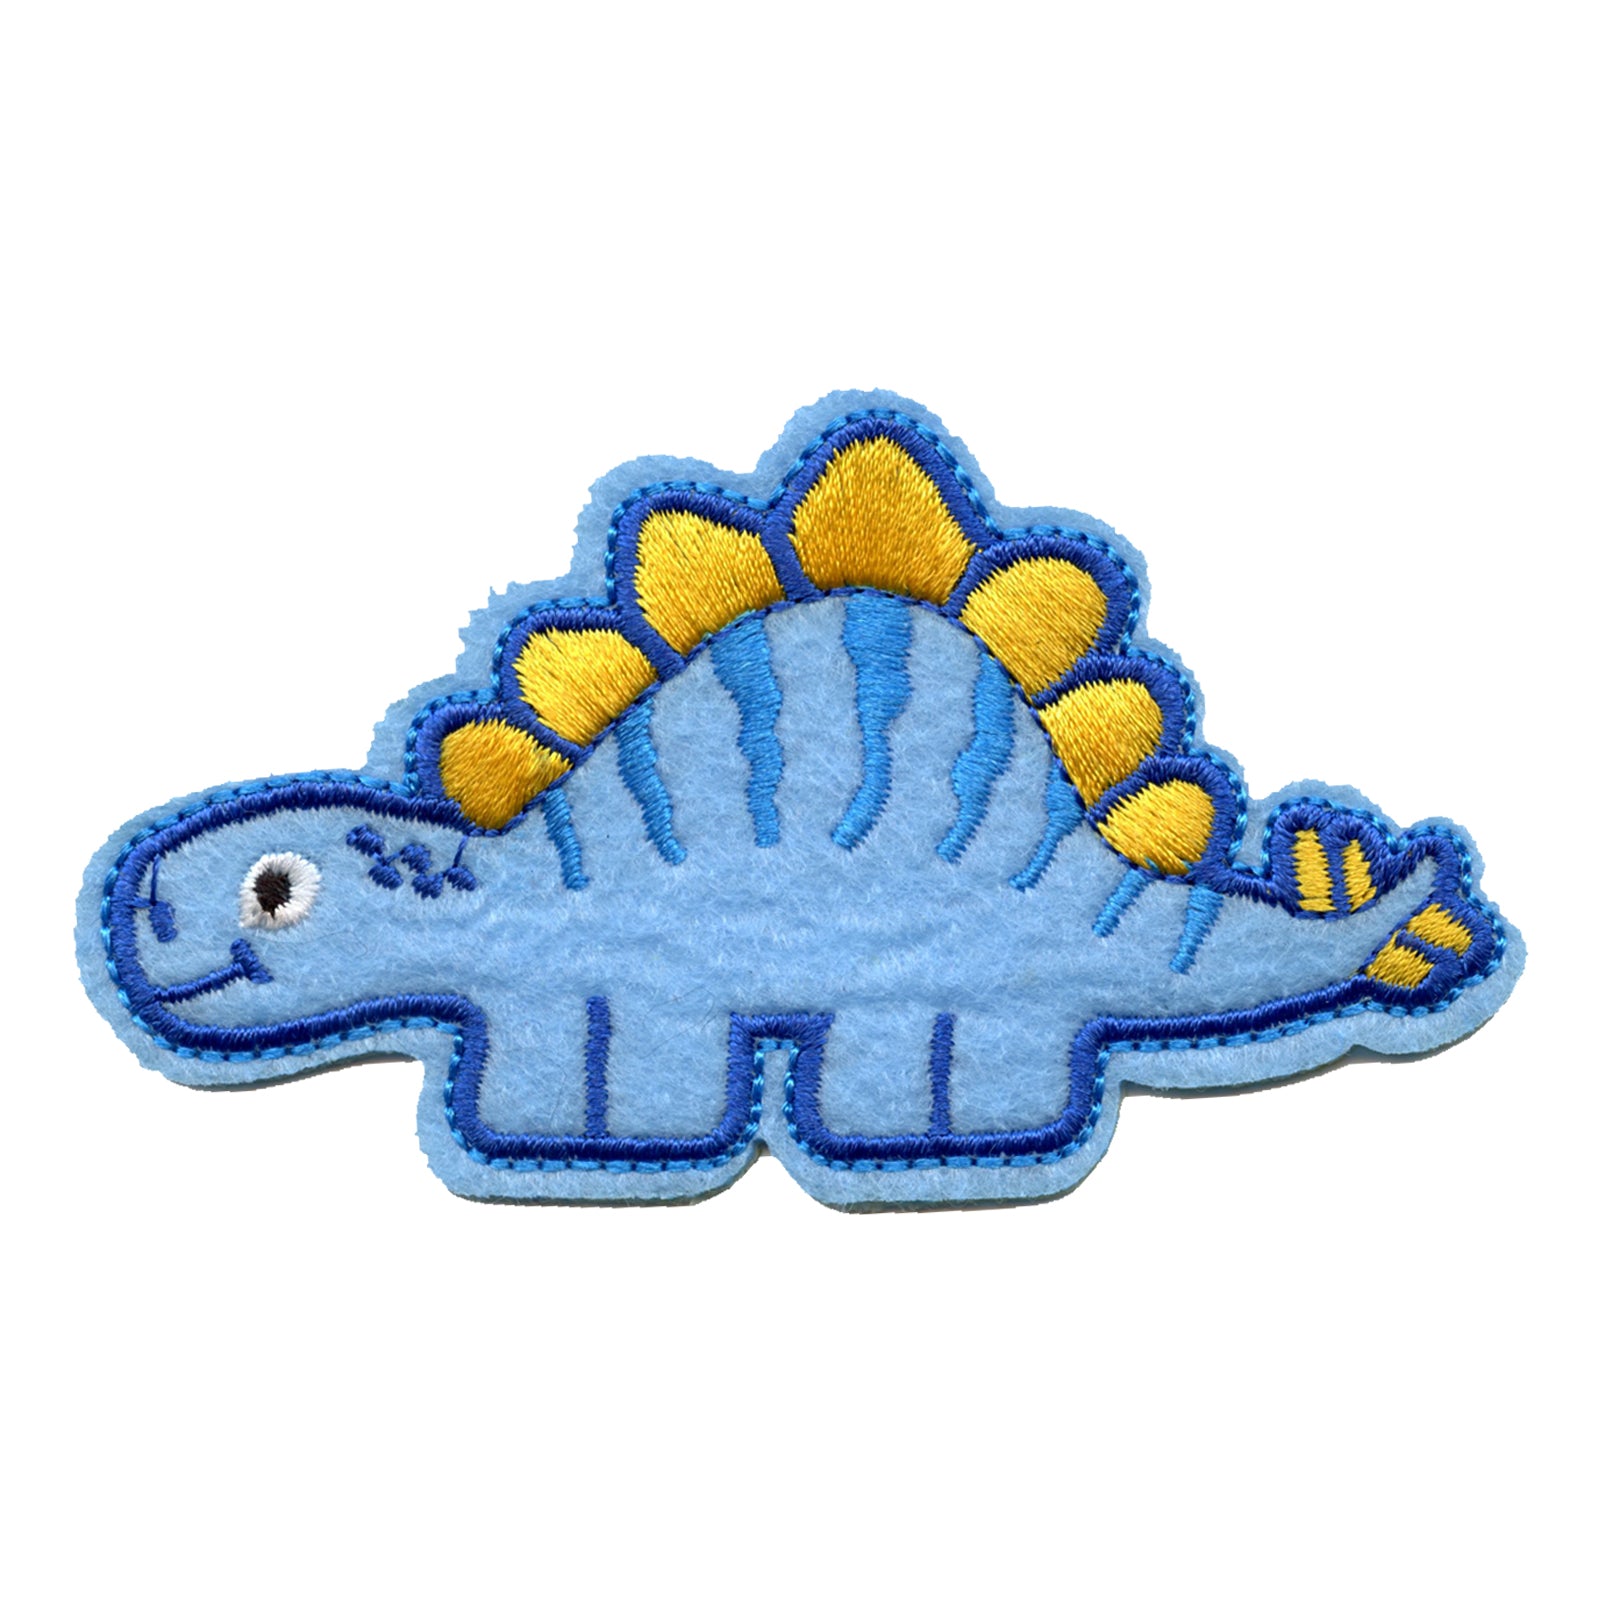 Cute Stegosaurus Dinosaur Embroidered Iron on Patch 